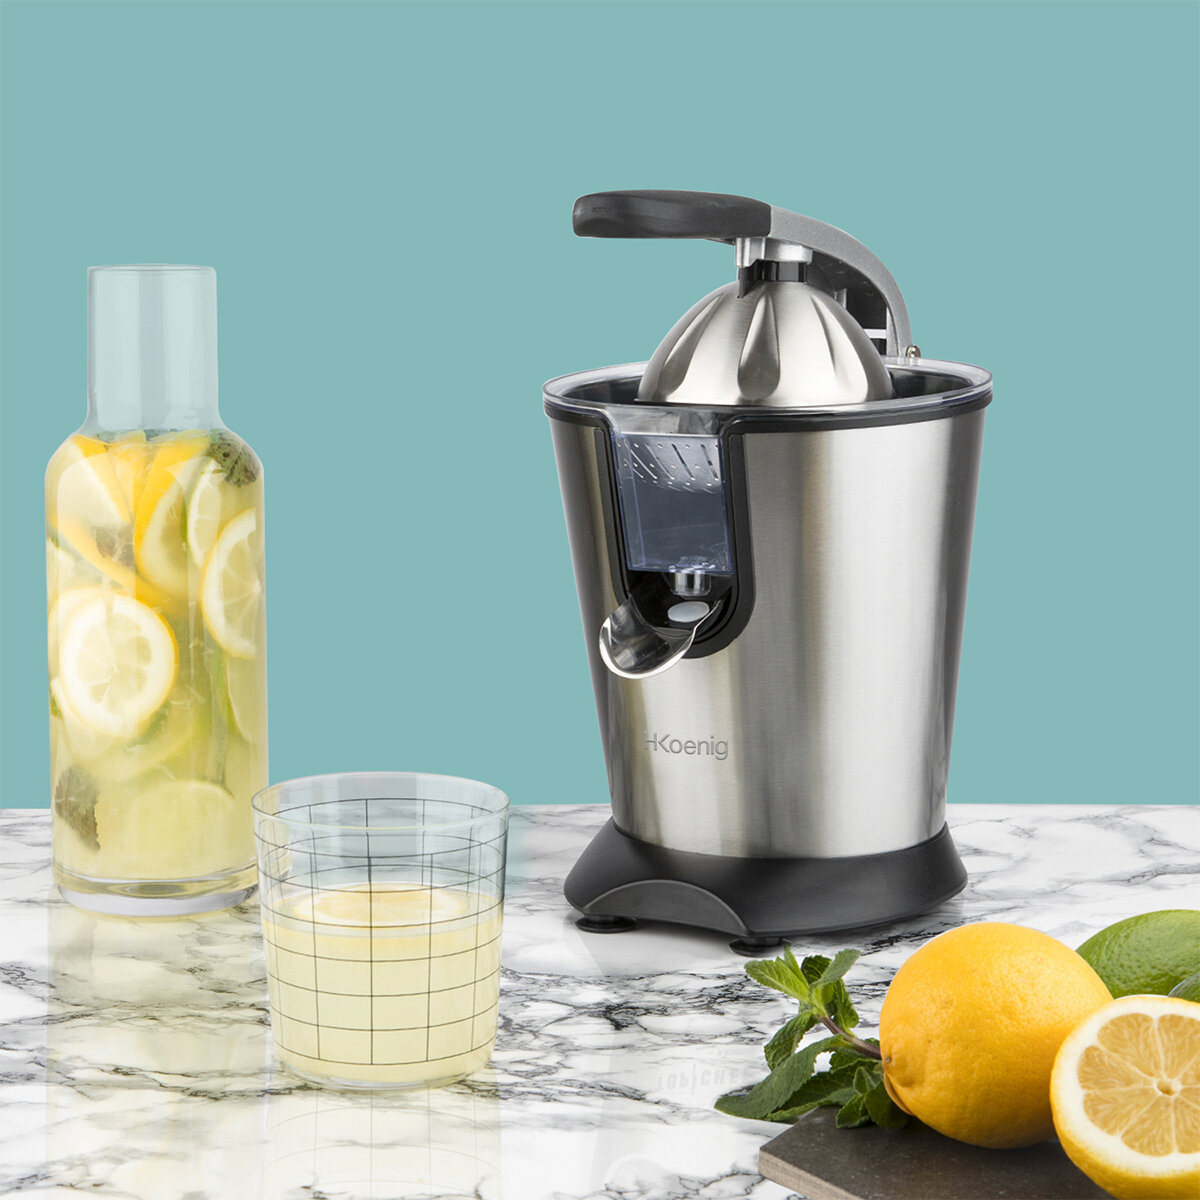 Our products > breakfast > citrus juicer : Koenig - EN